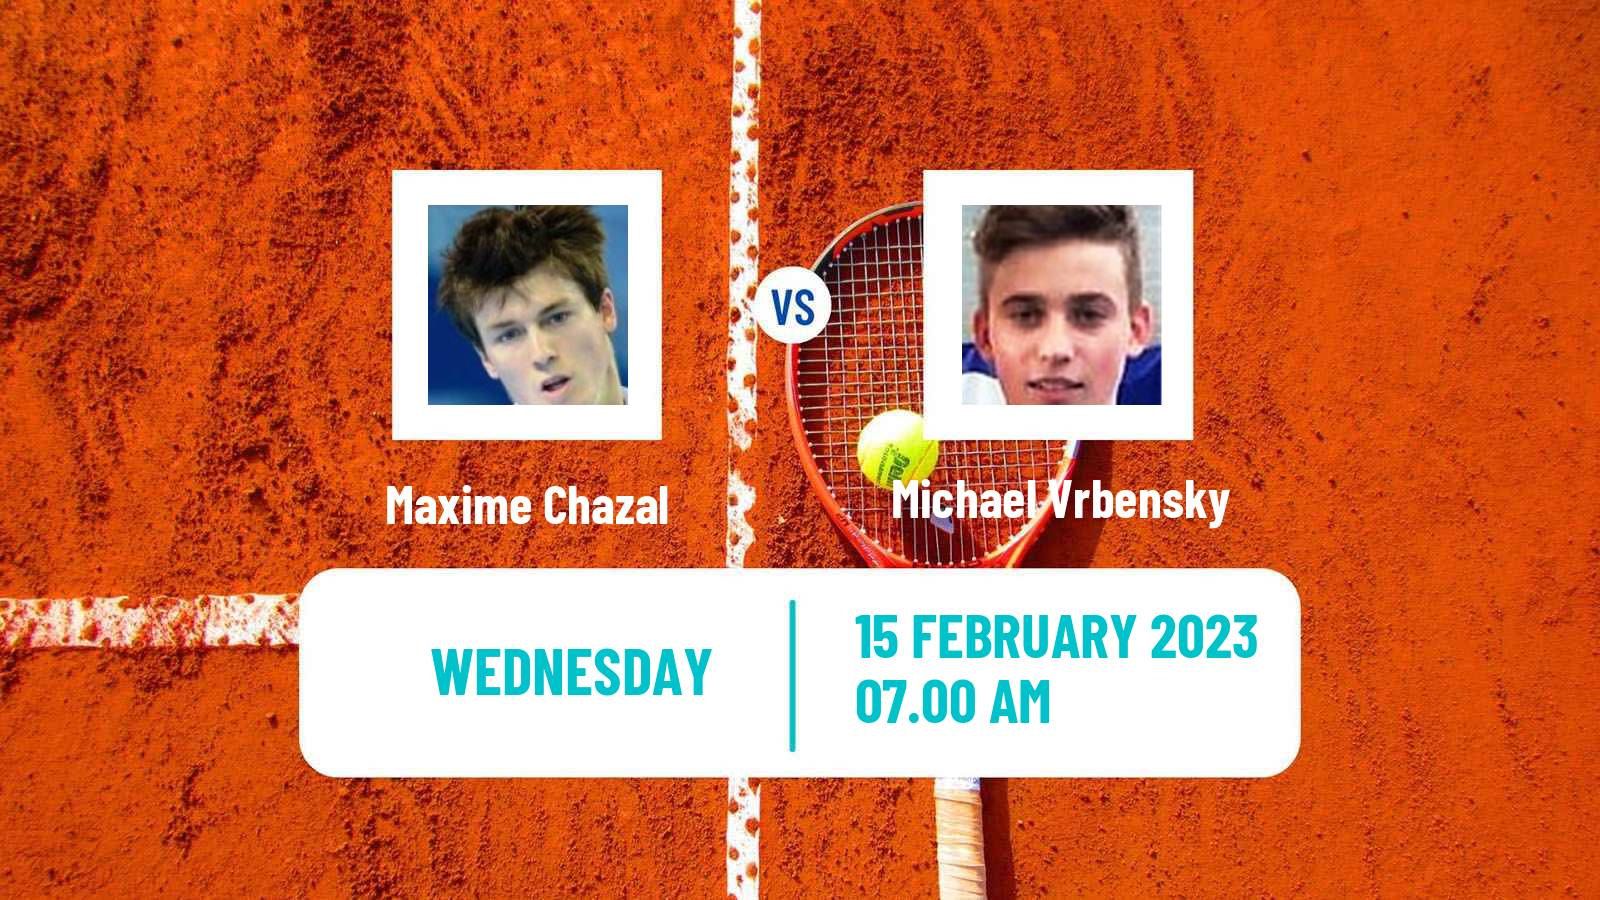 Tennis ITF Tournaments Maxime Chazal - Michael Vrbensky